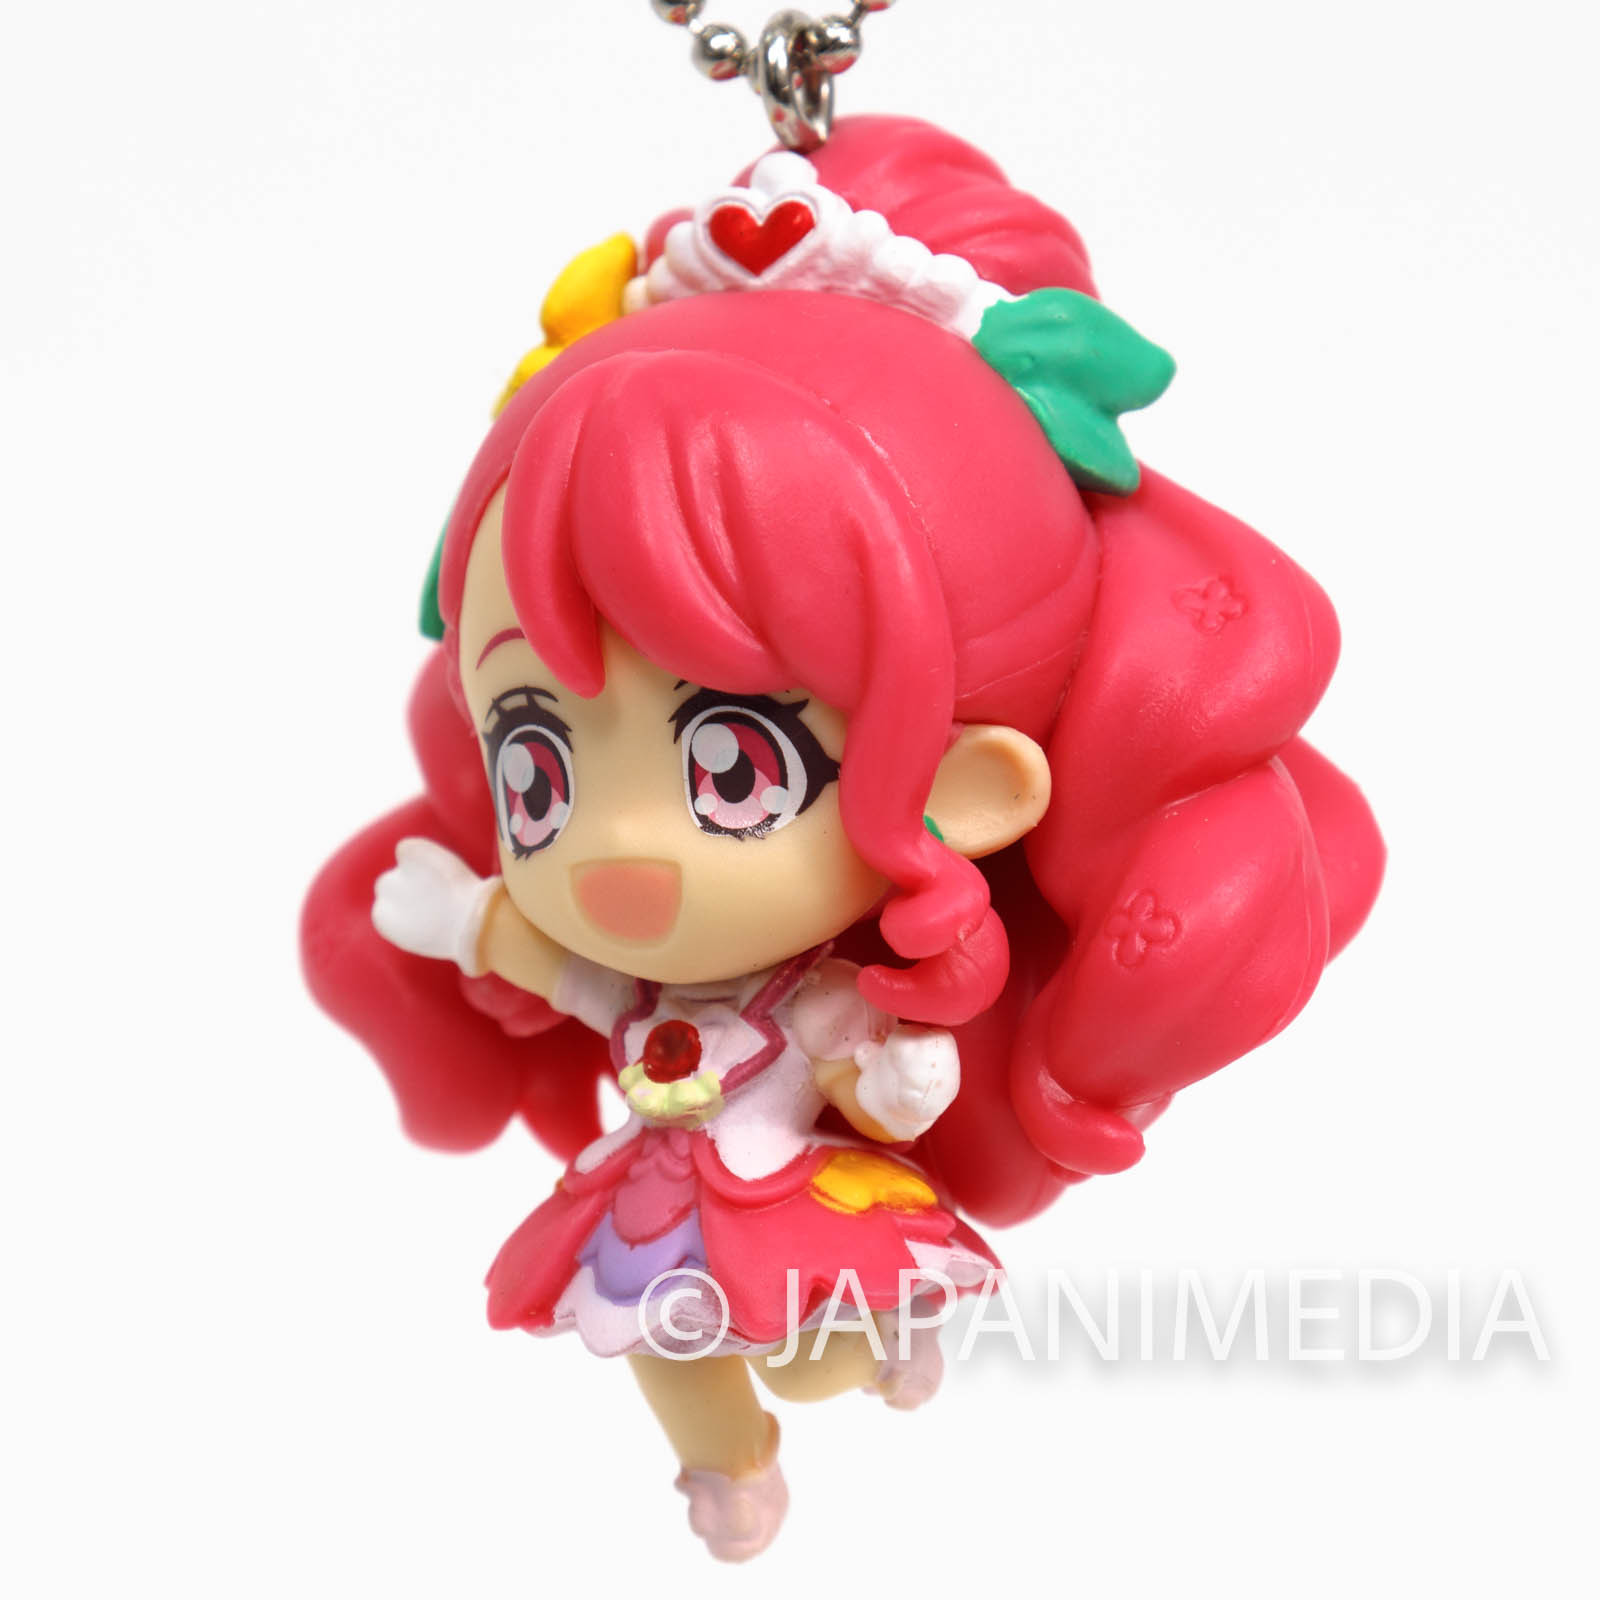 Healin' Good Pretty Cure Cure Grace PreCure Mascot Figure Ball Keychain JAPAN ANIME